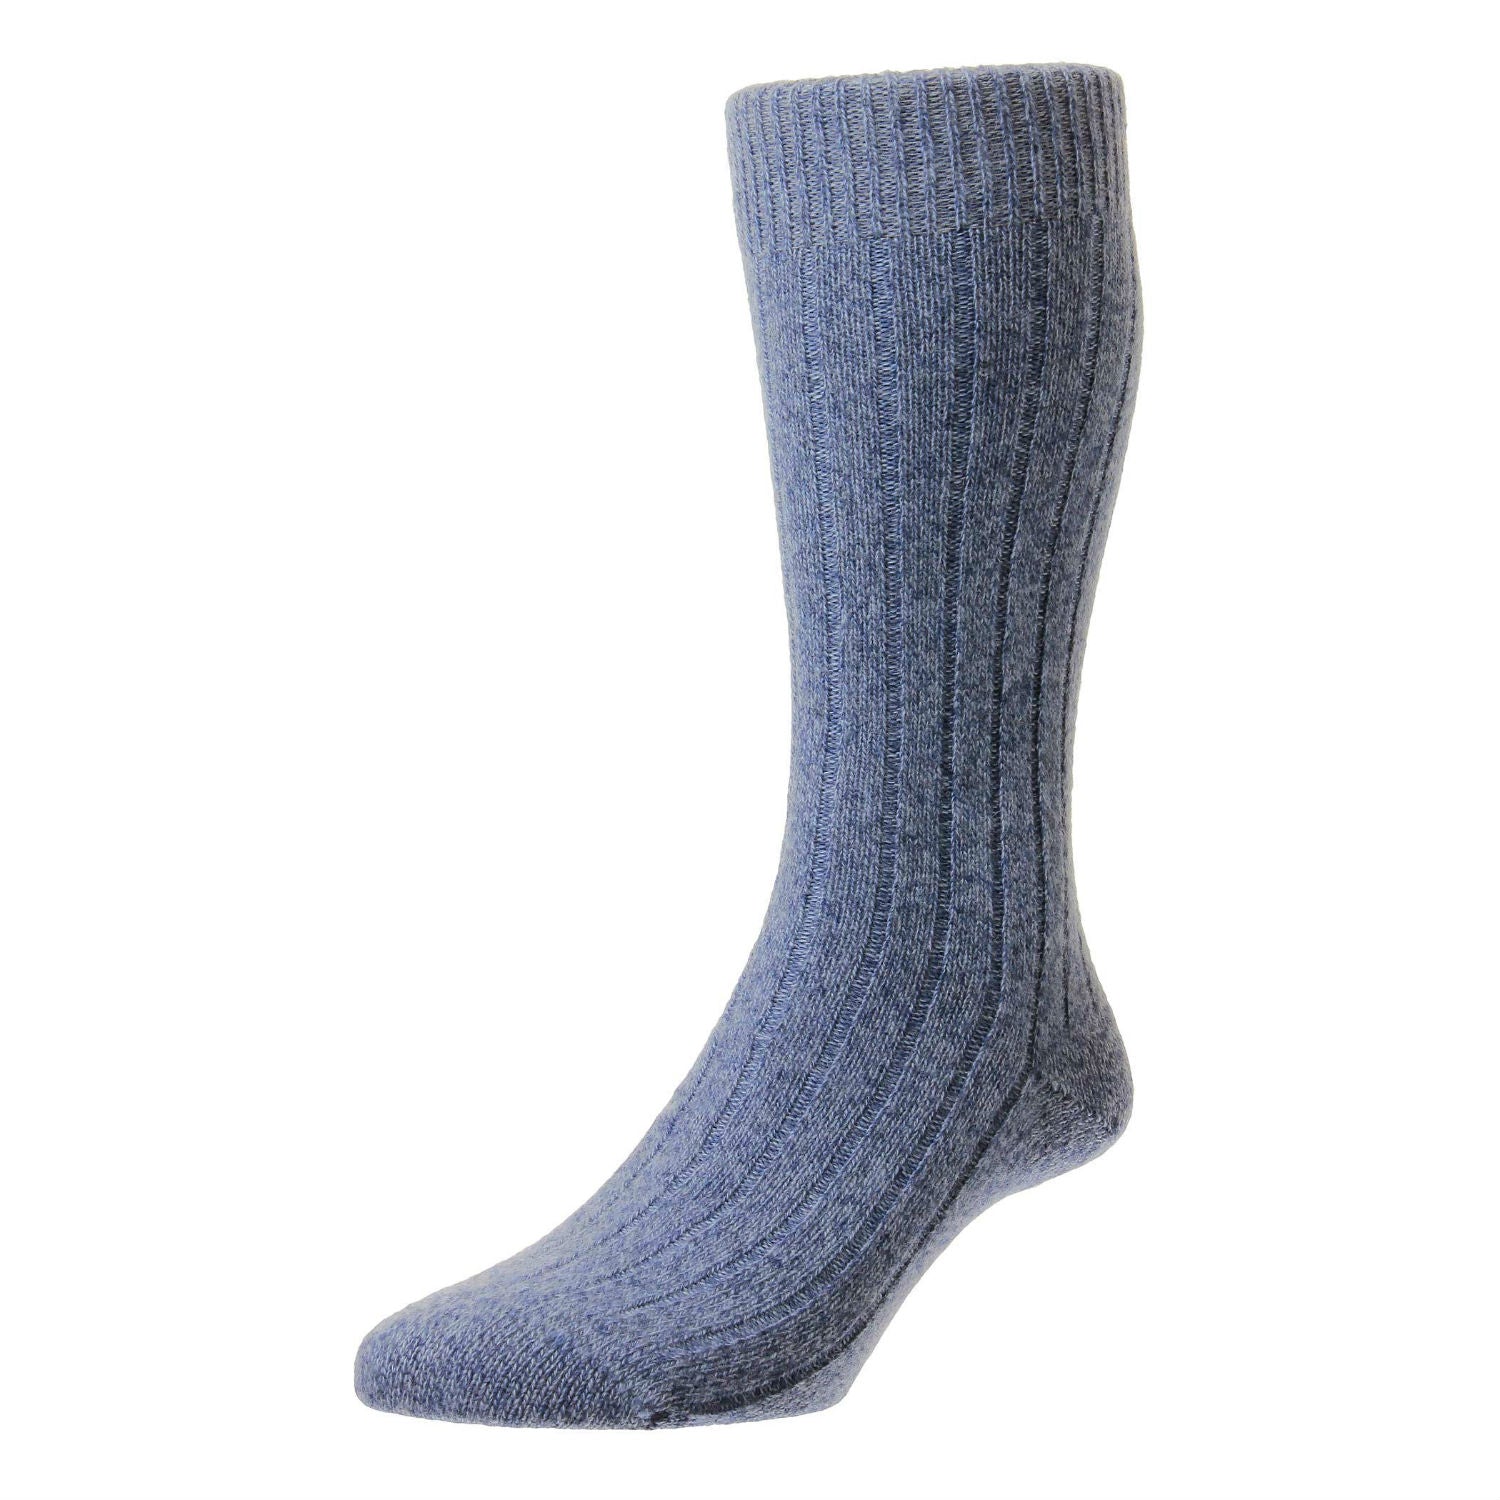 pantherella-socks-cashmere-mens-socks-denim-blue